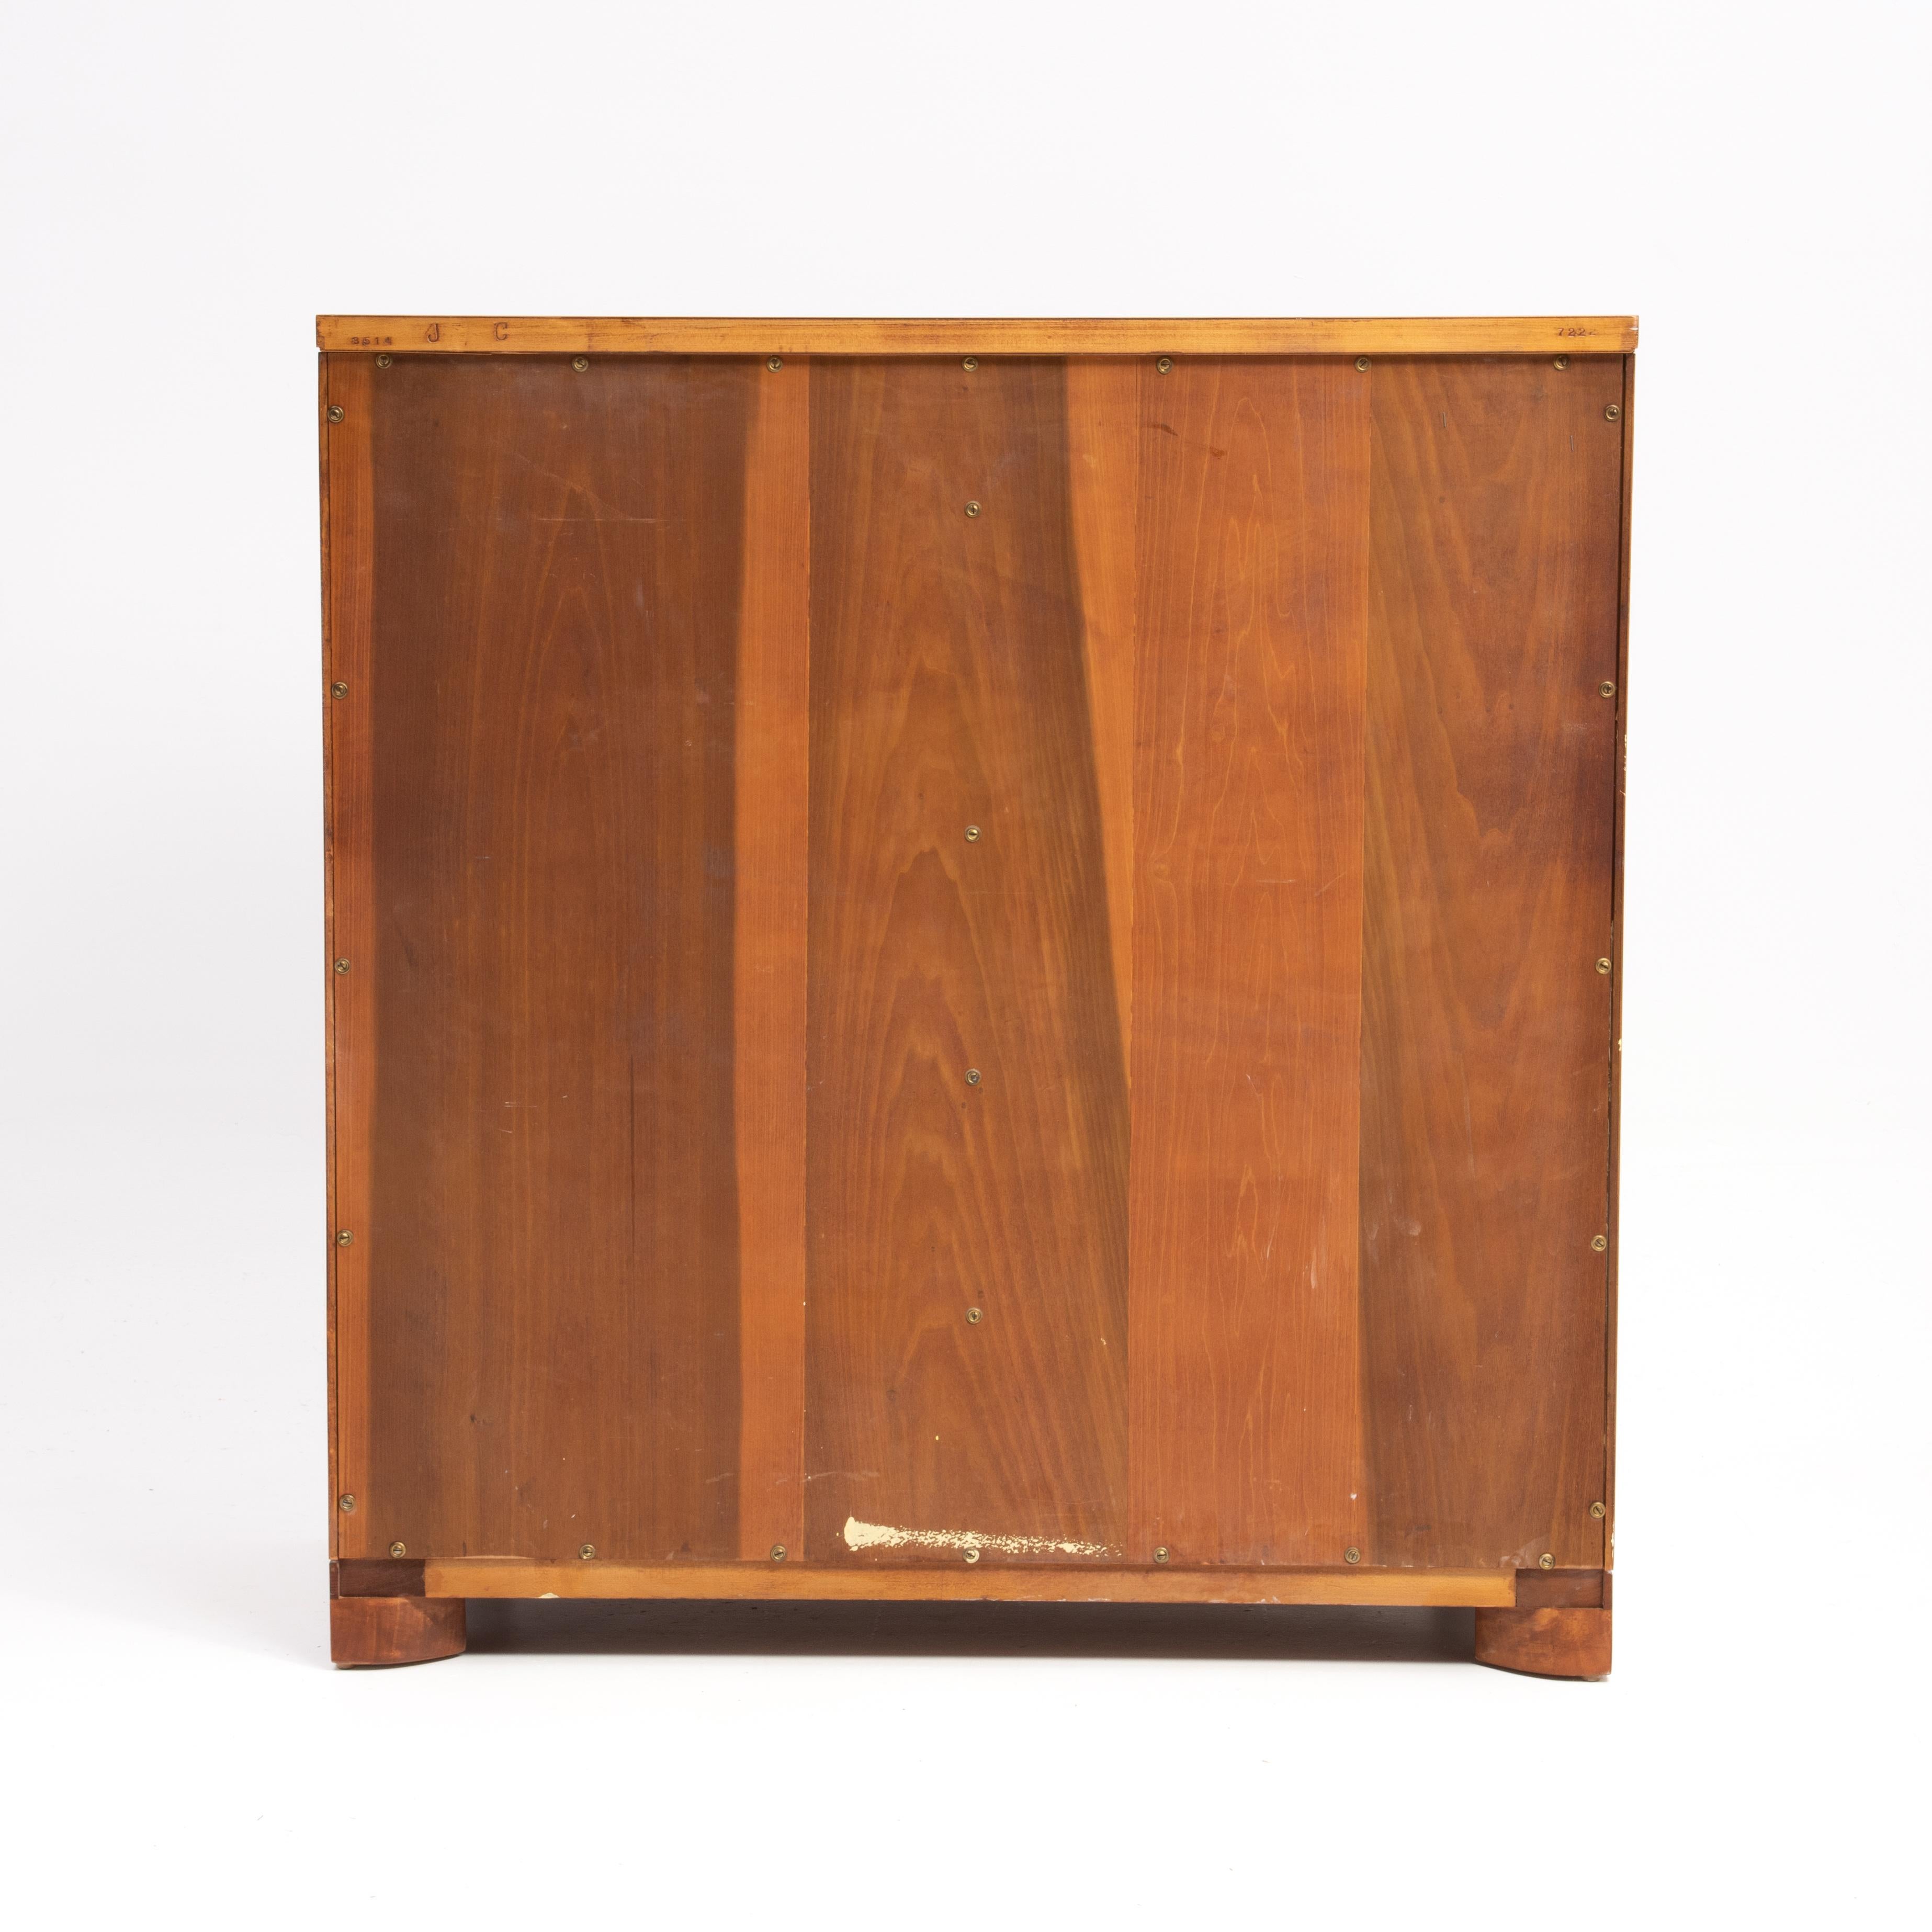 American Widdicomb Mid Century Modern Five Drawer Dresser Bachelors Chest Cherry 1950s